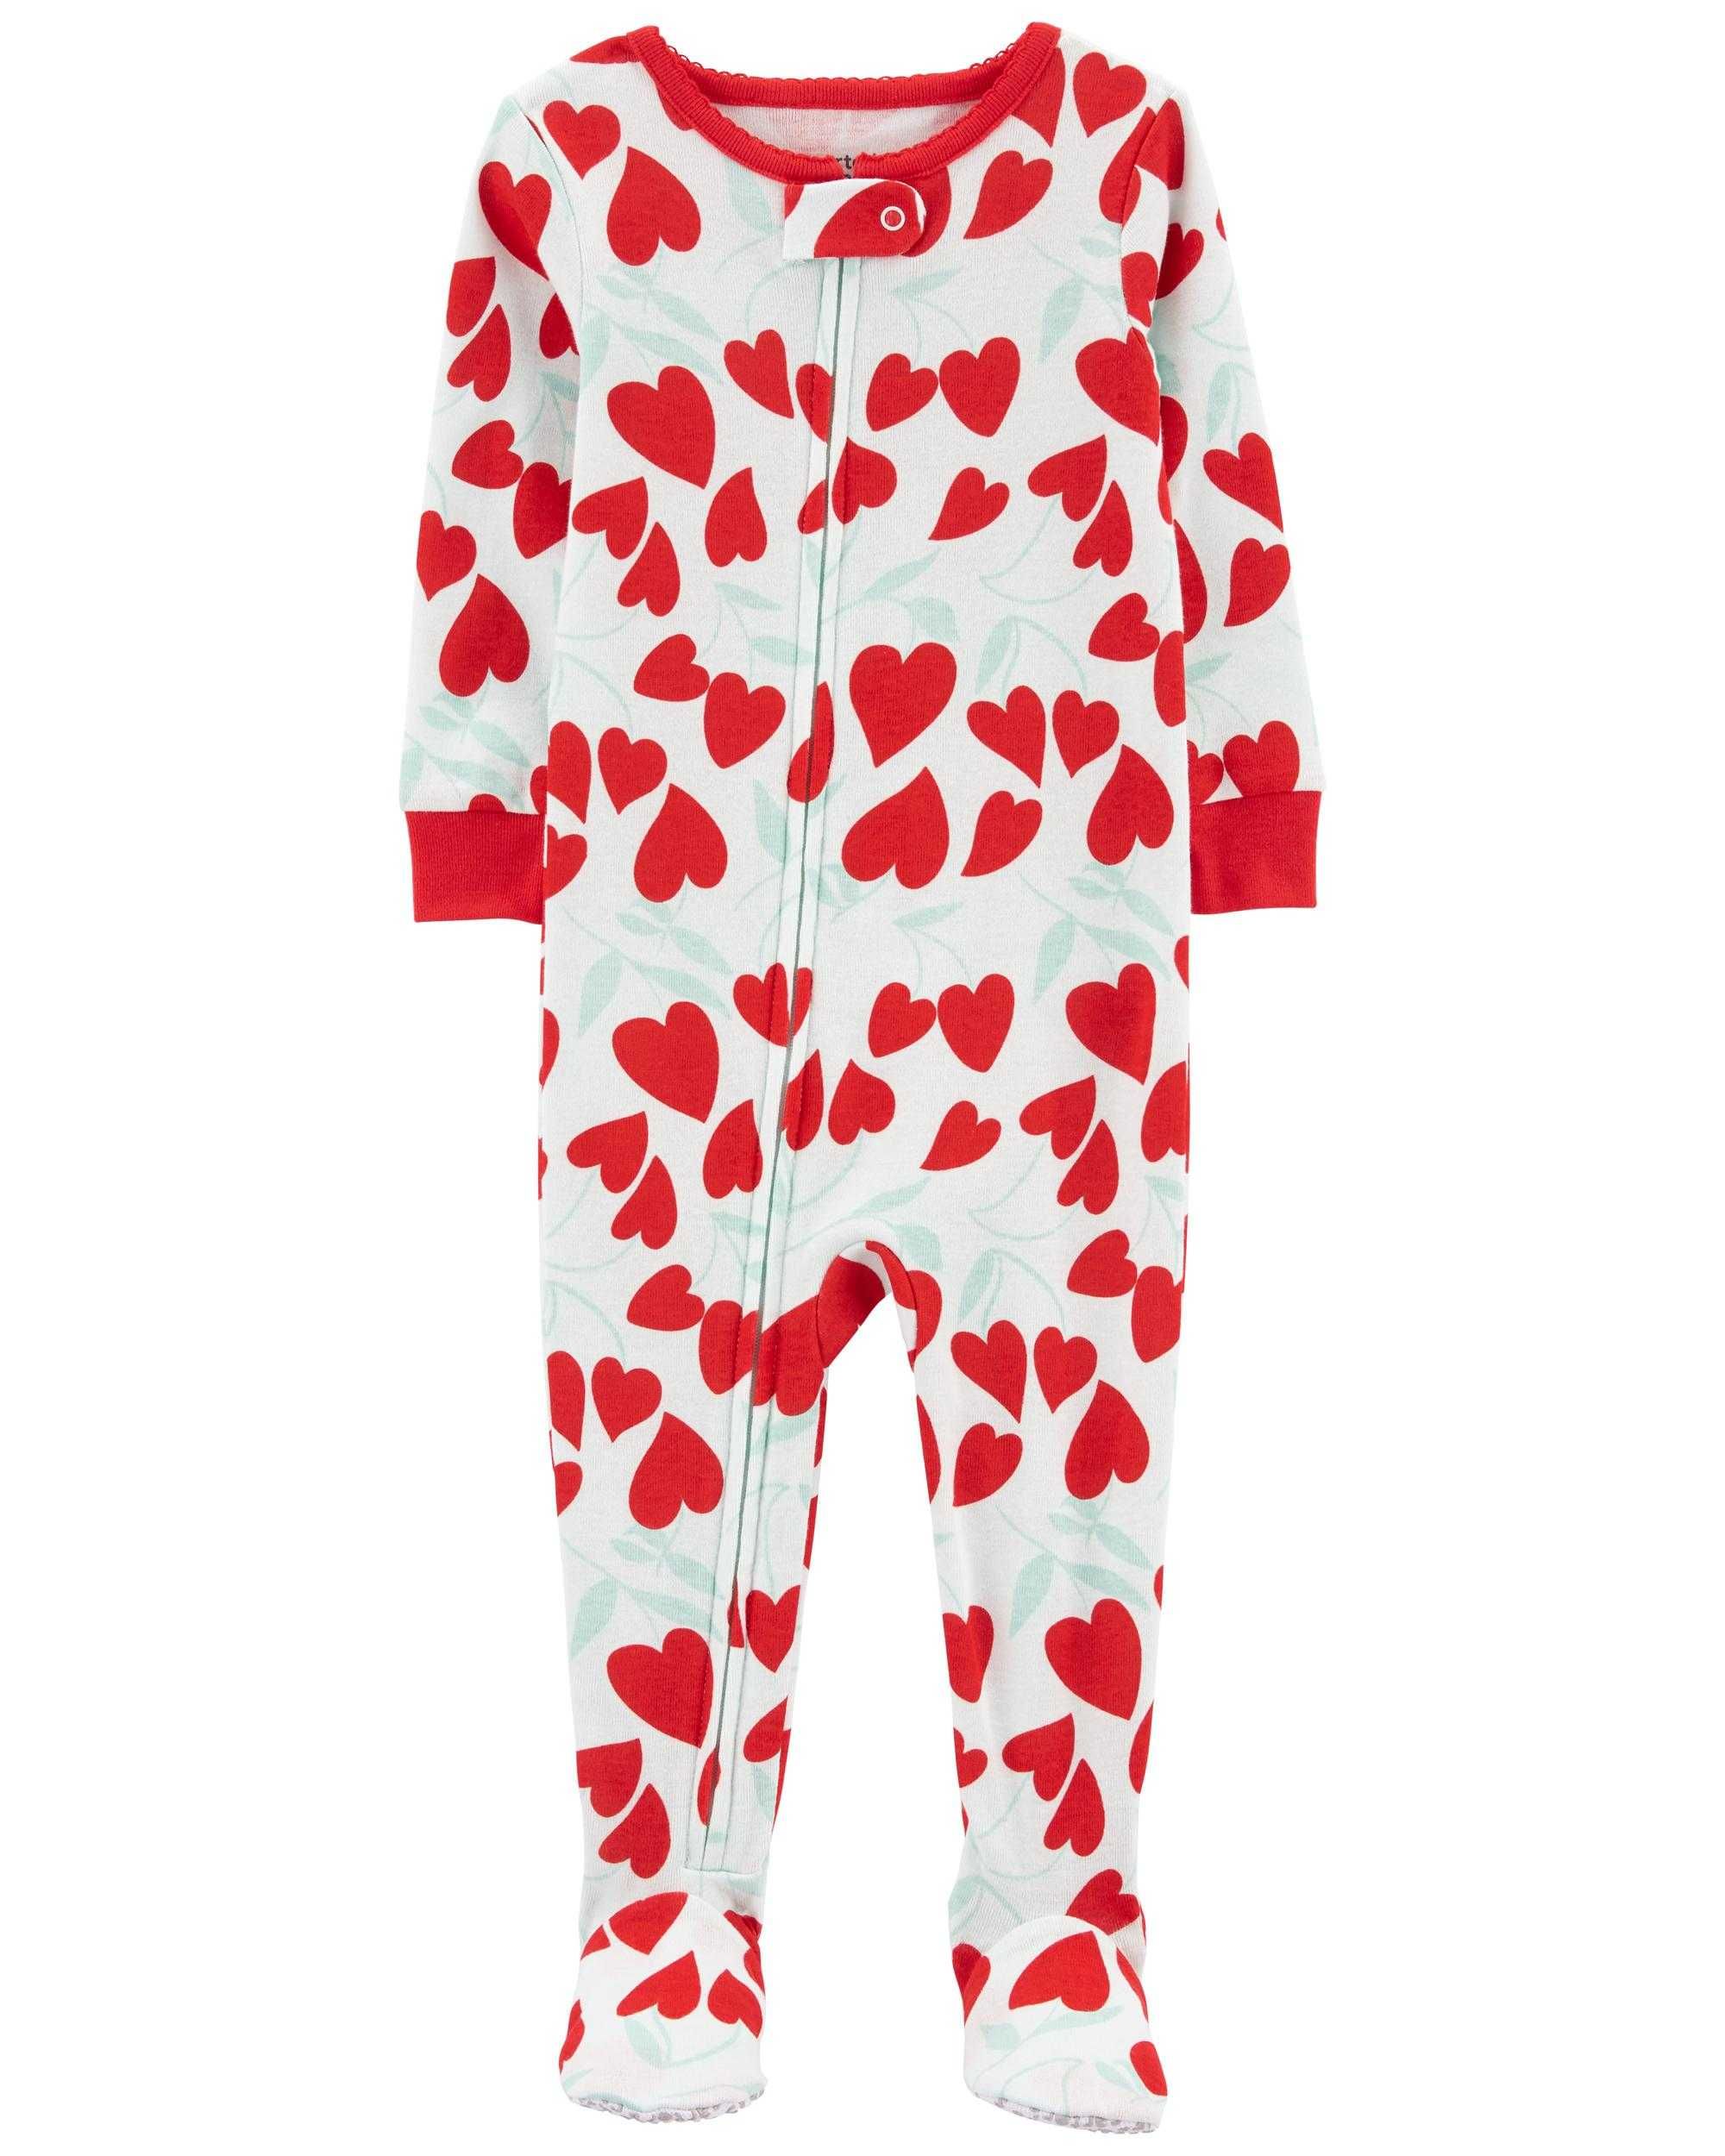 Toddler 1-Piece Cherry 100% Snug Fit Cotton Footie PJs | Carter's